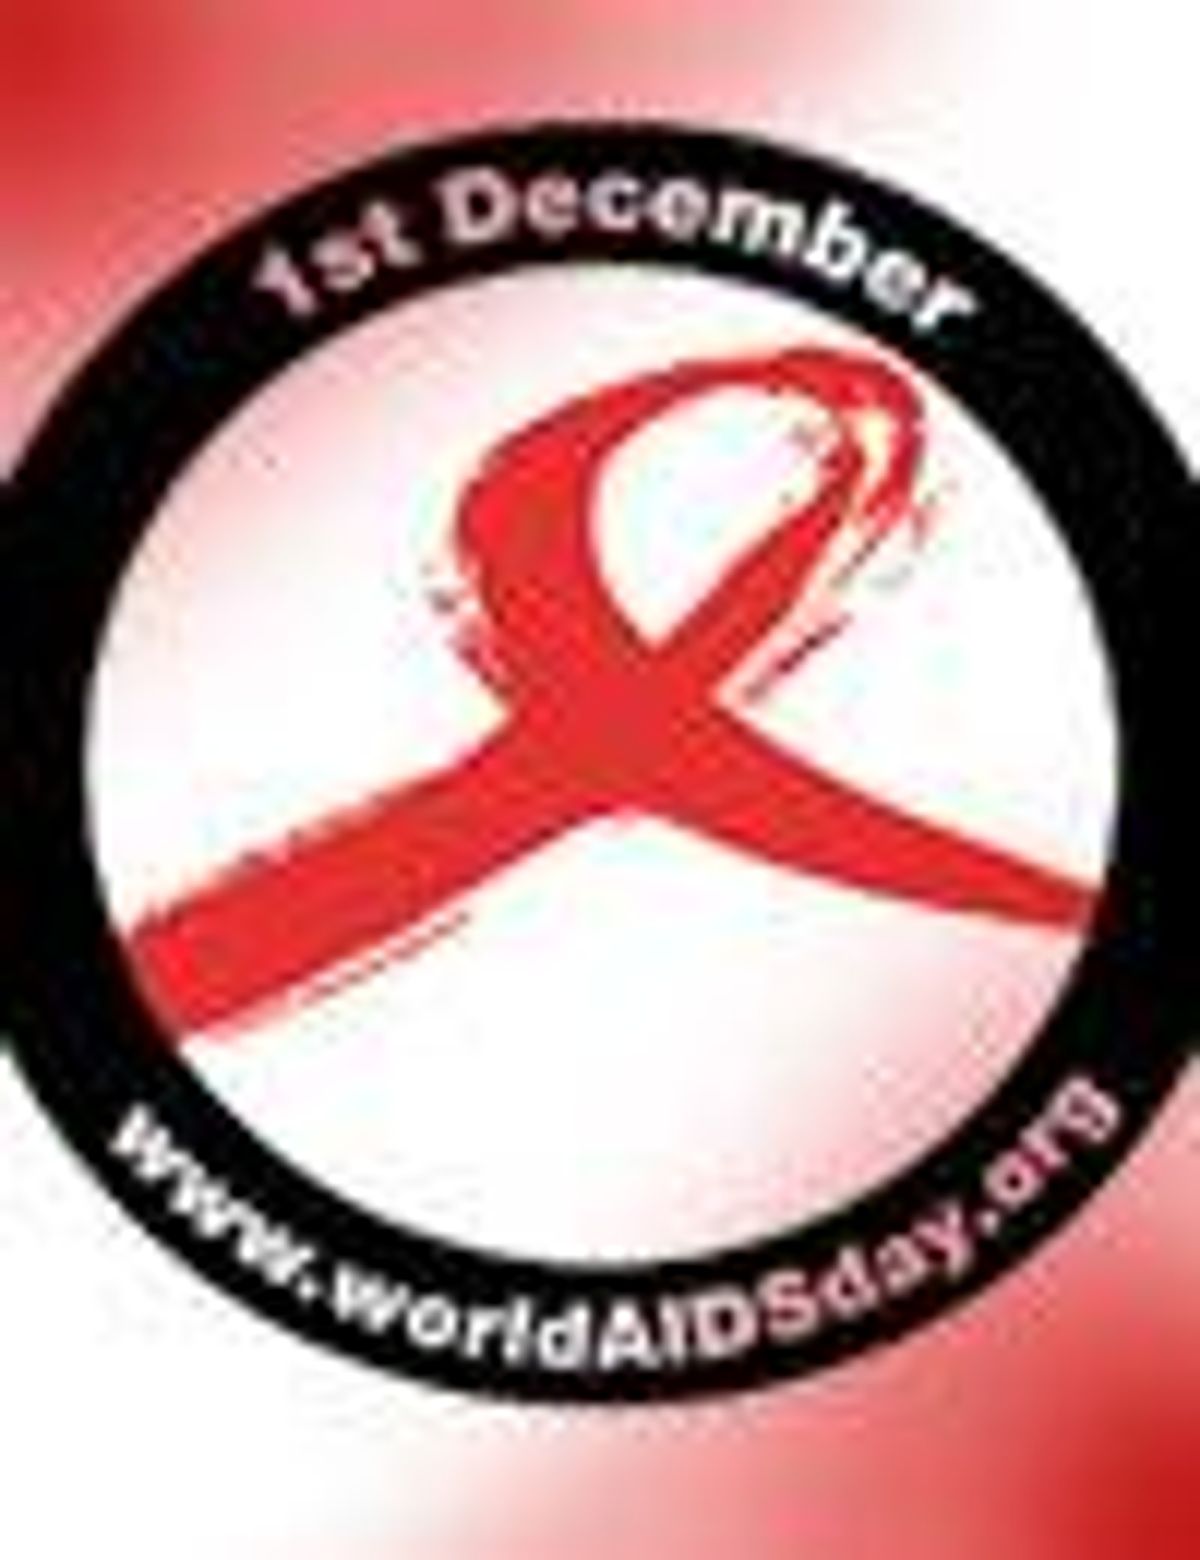 World_aids_day